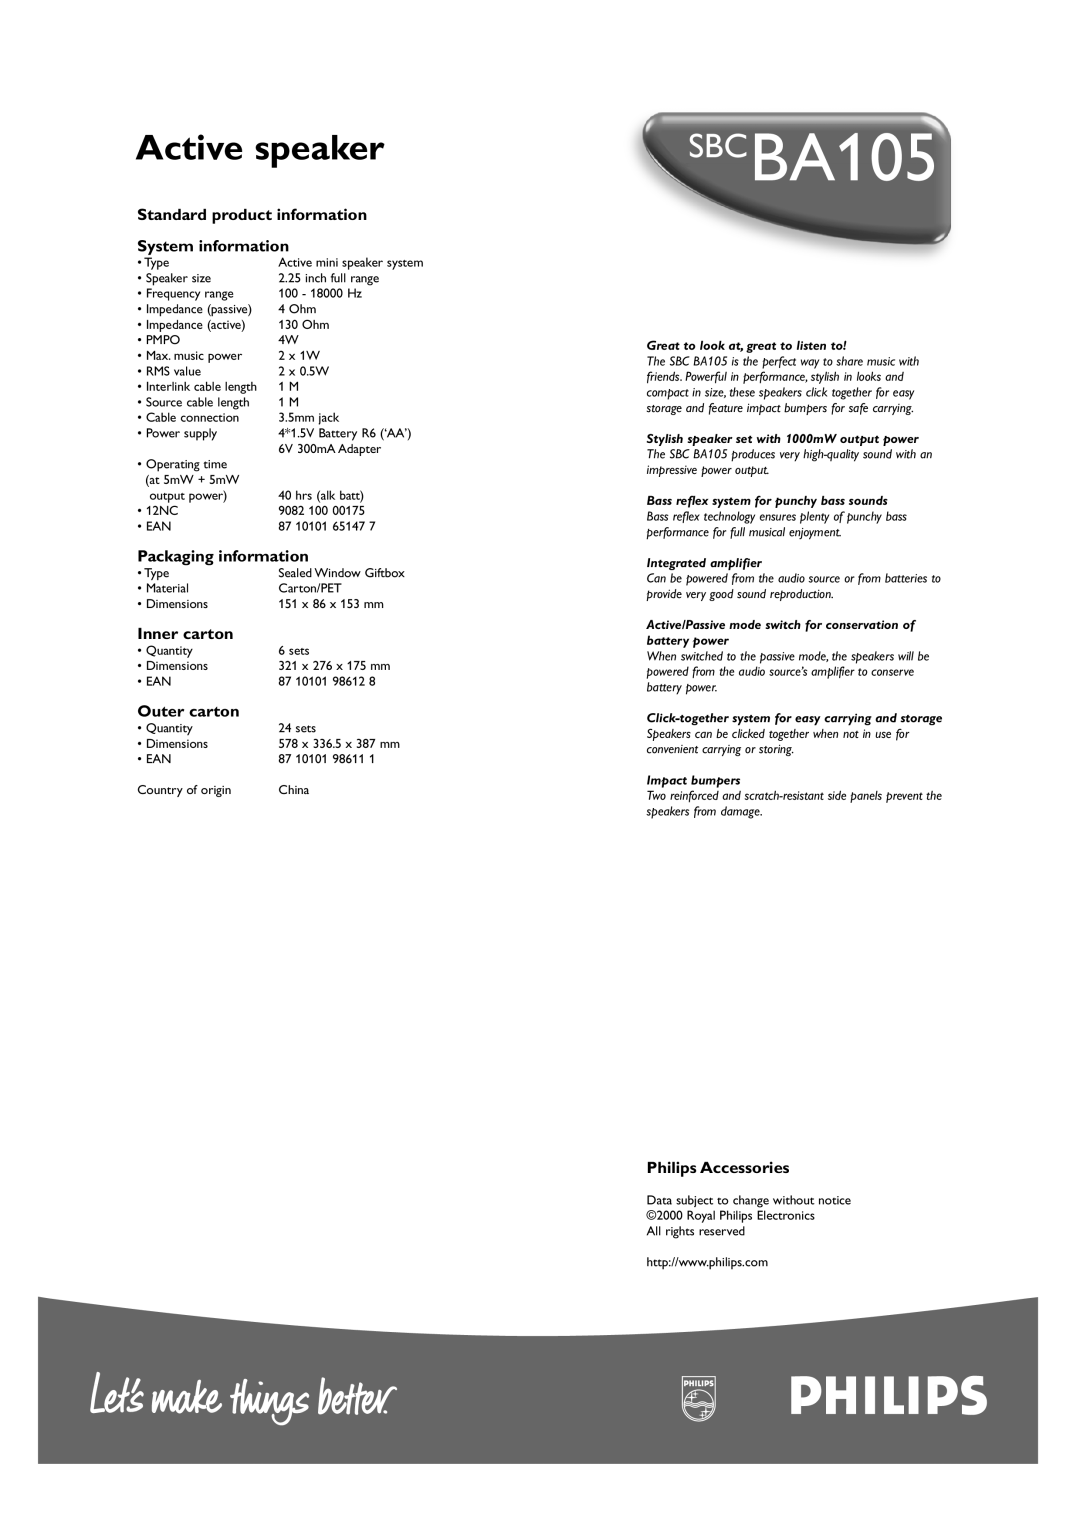 Philips SBCBA105 Active speaker, Standard product information System information, Packaging information, Inner carton 